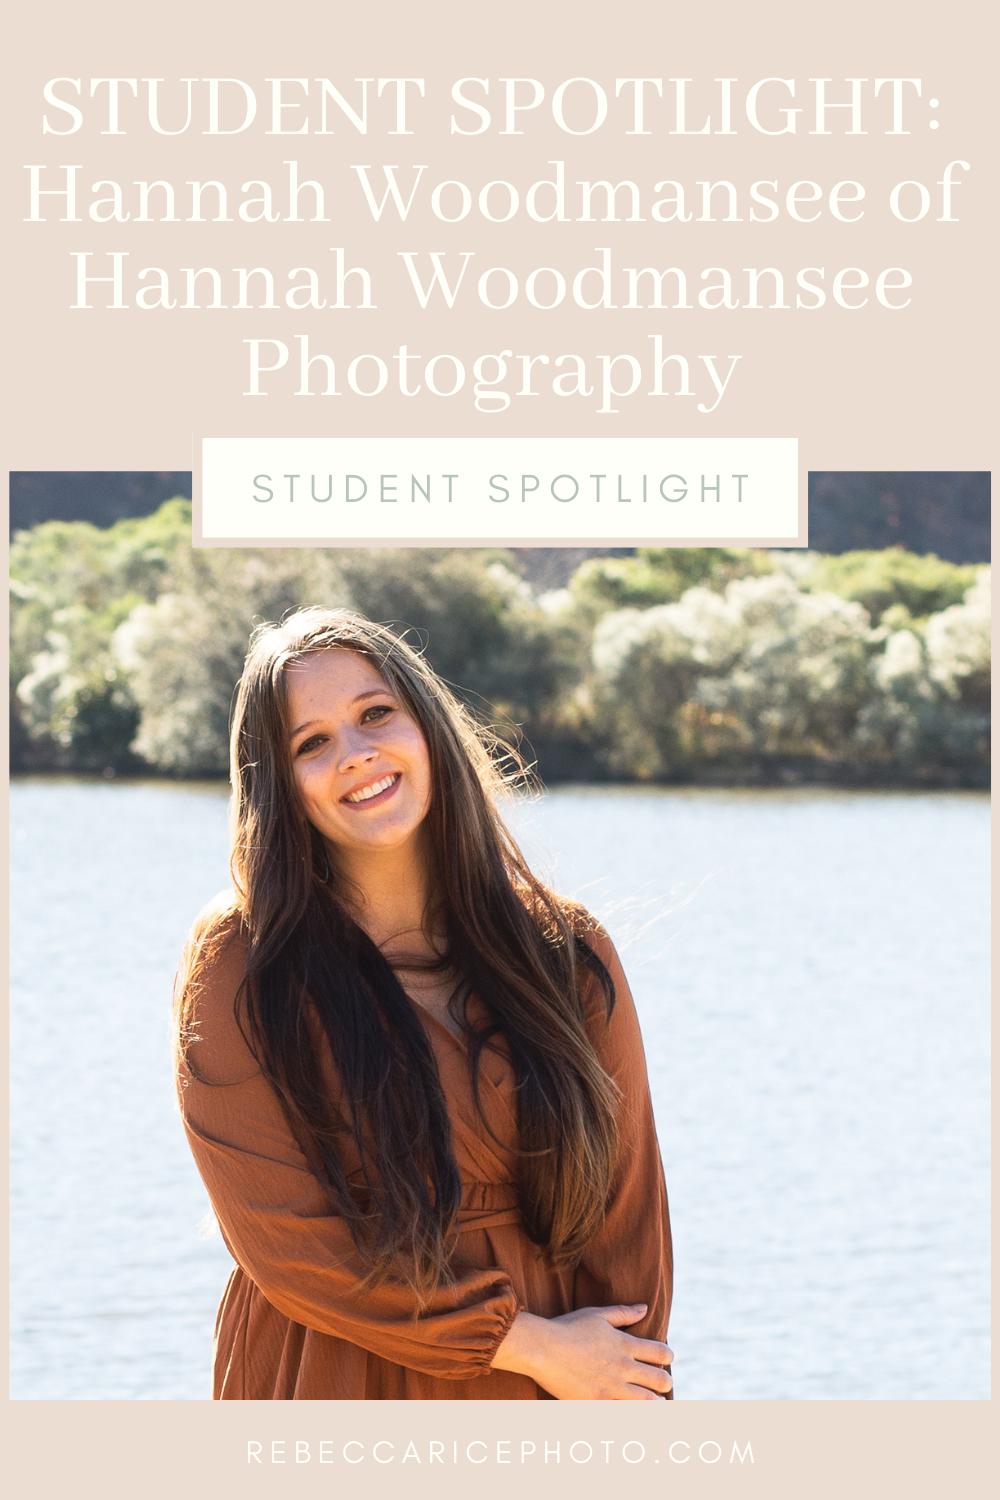 Student Spotlight: Hannah Woodmansee of Hannah Woodmansee Photography